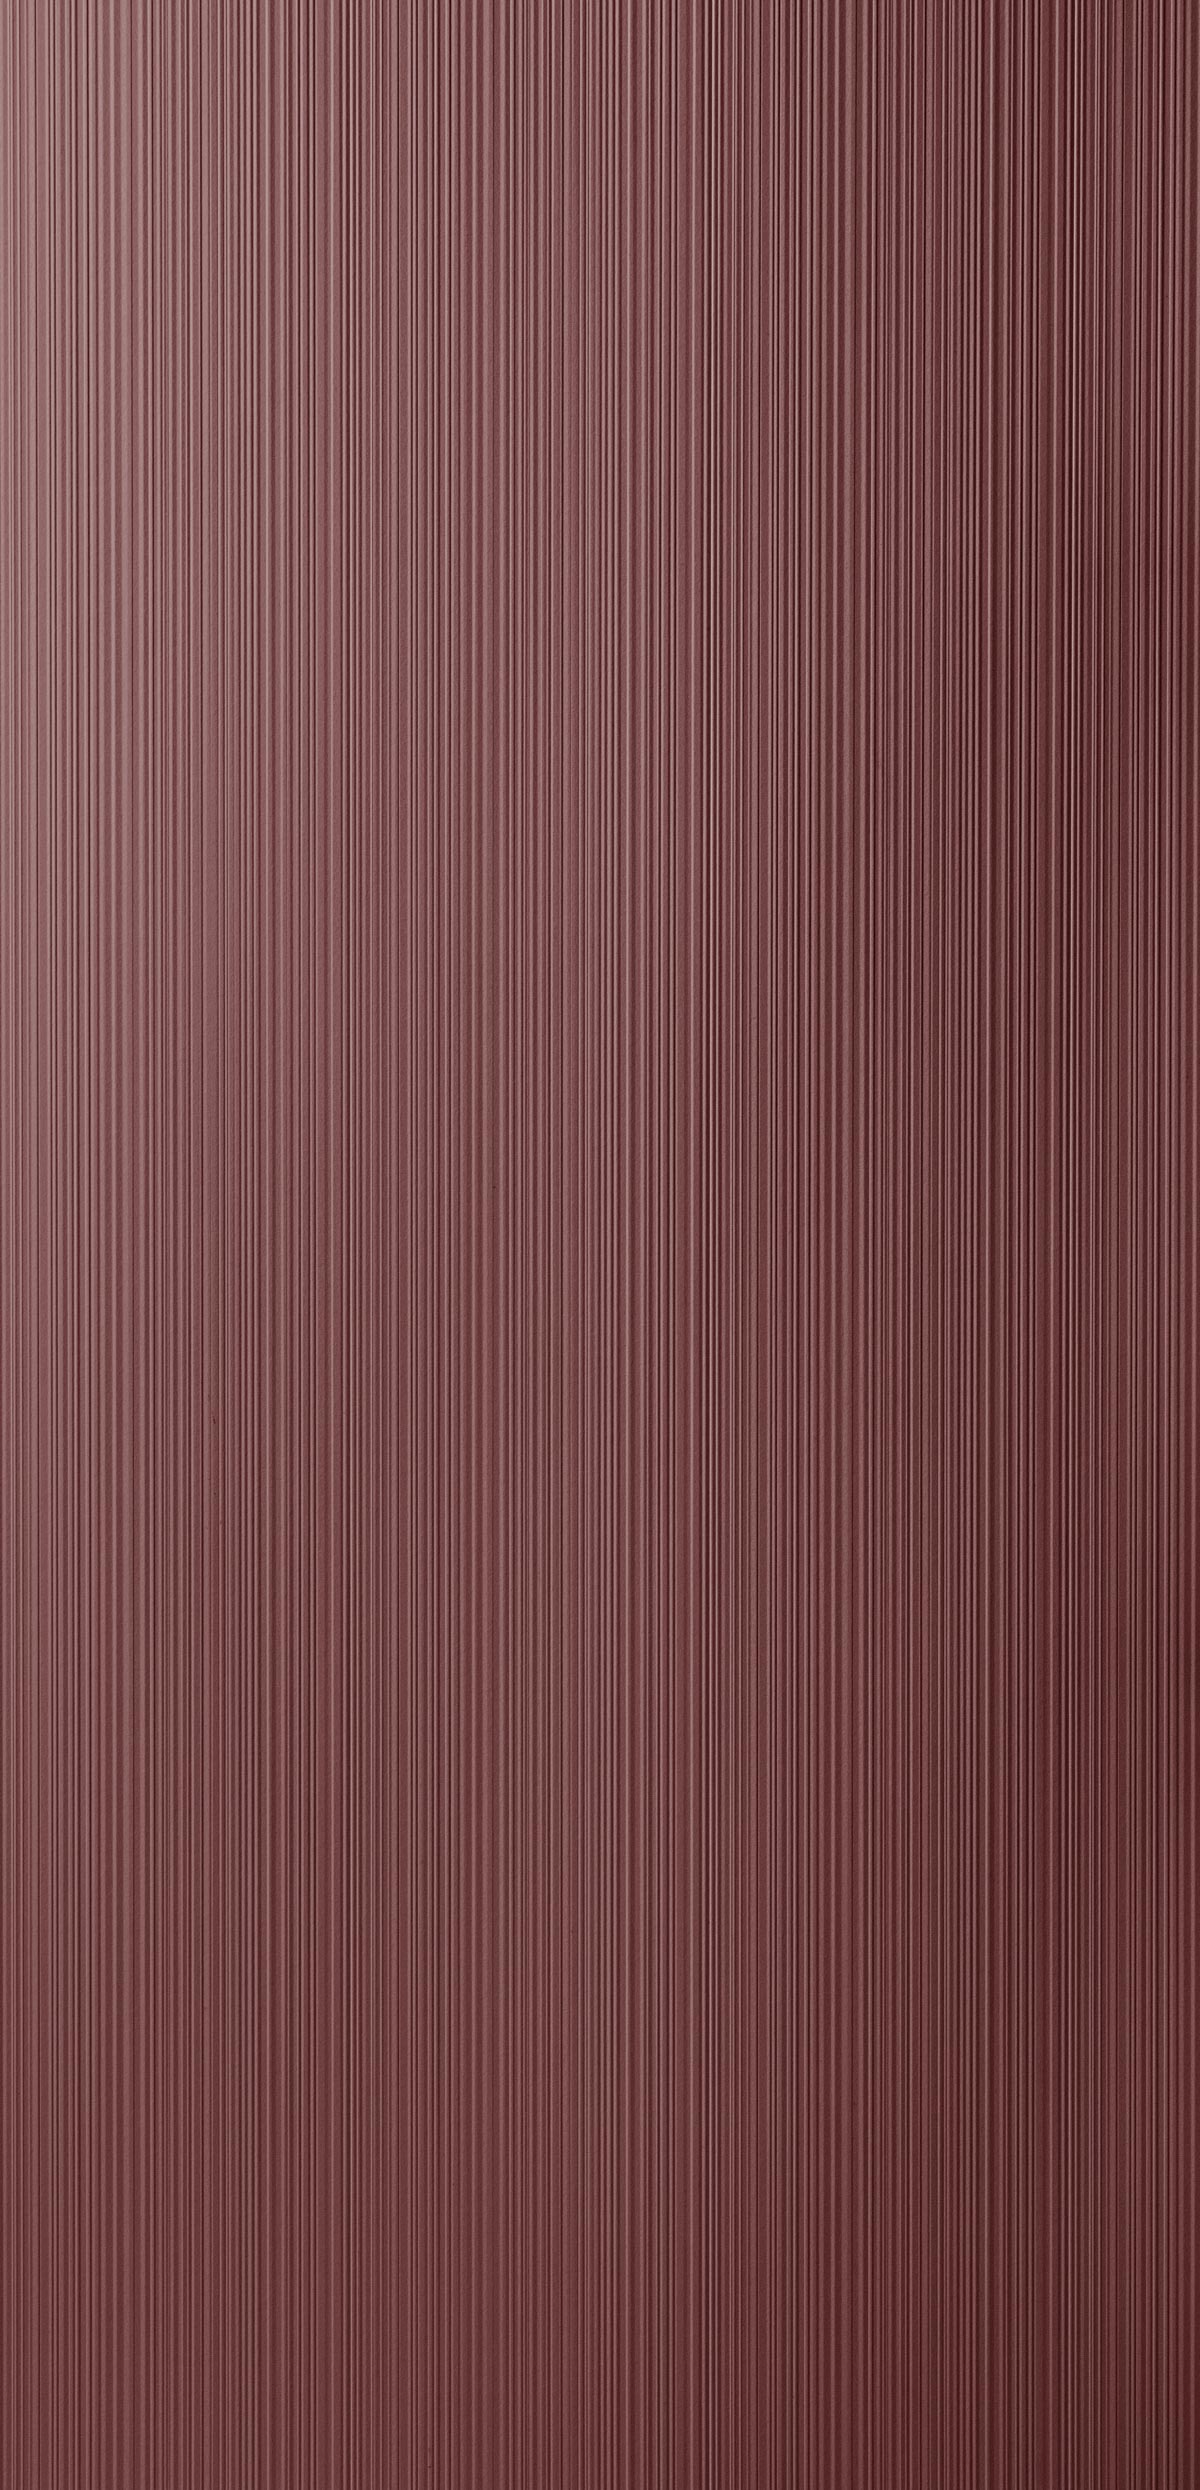 Lines Burgundy 012-panel